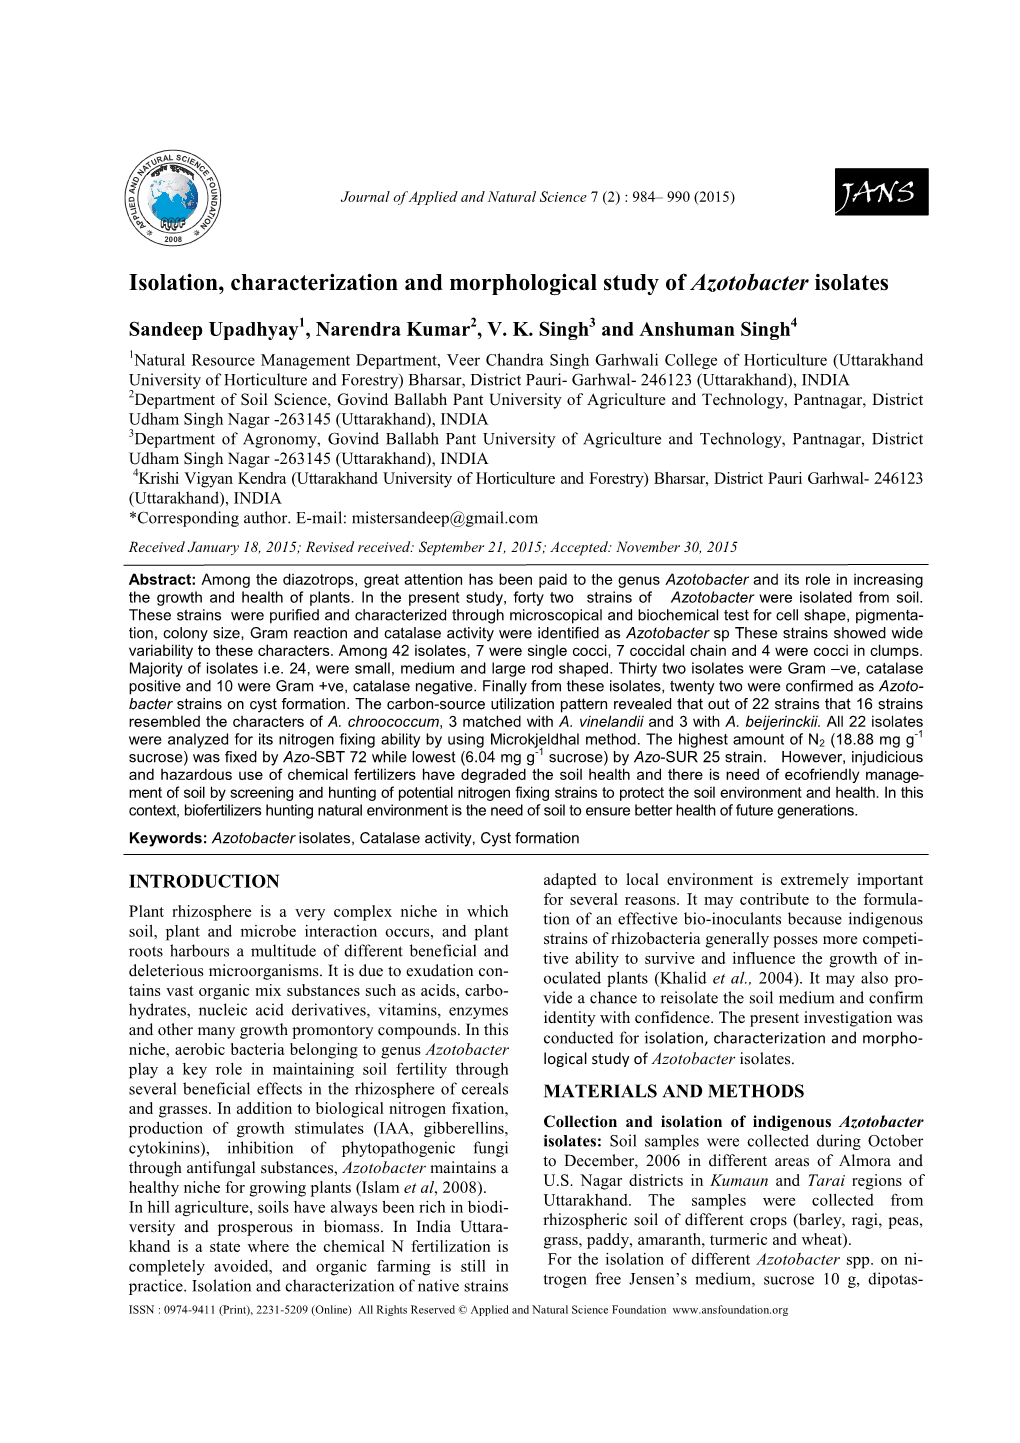 Isolation, Characterization and Morphological Study of Azotobacter Isolates